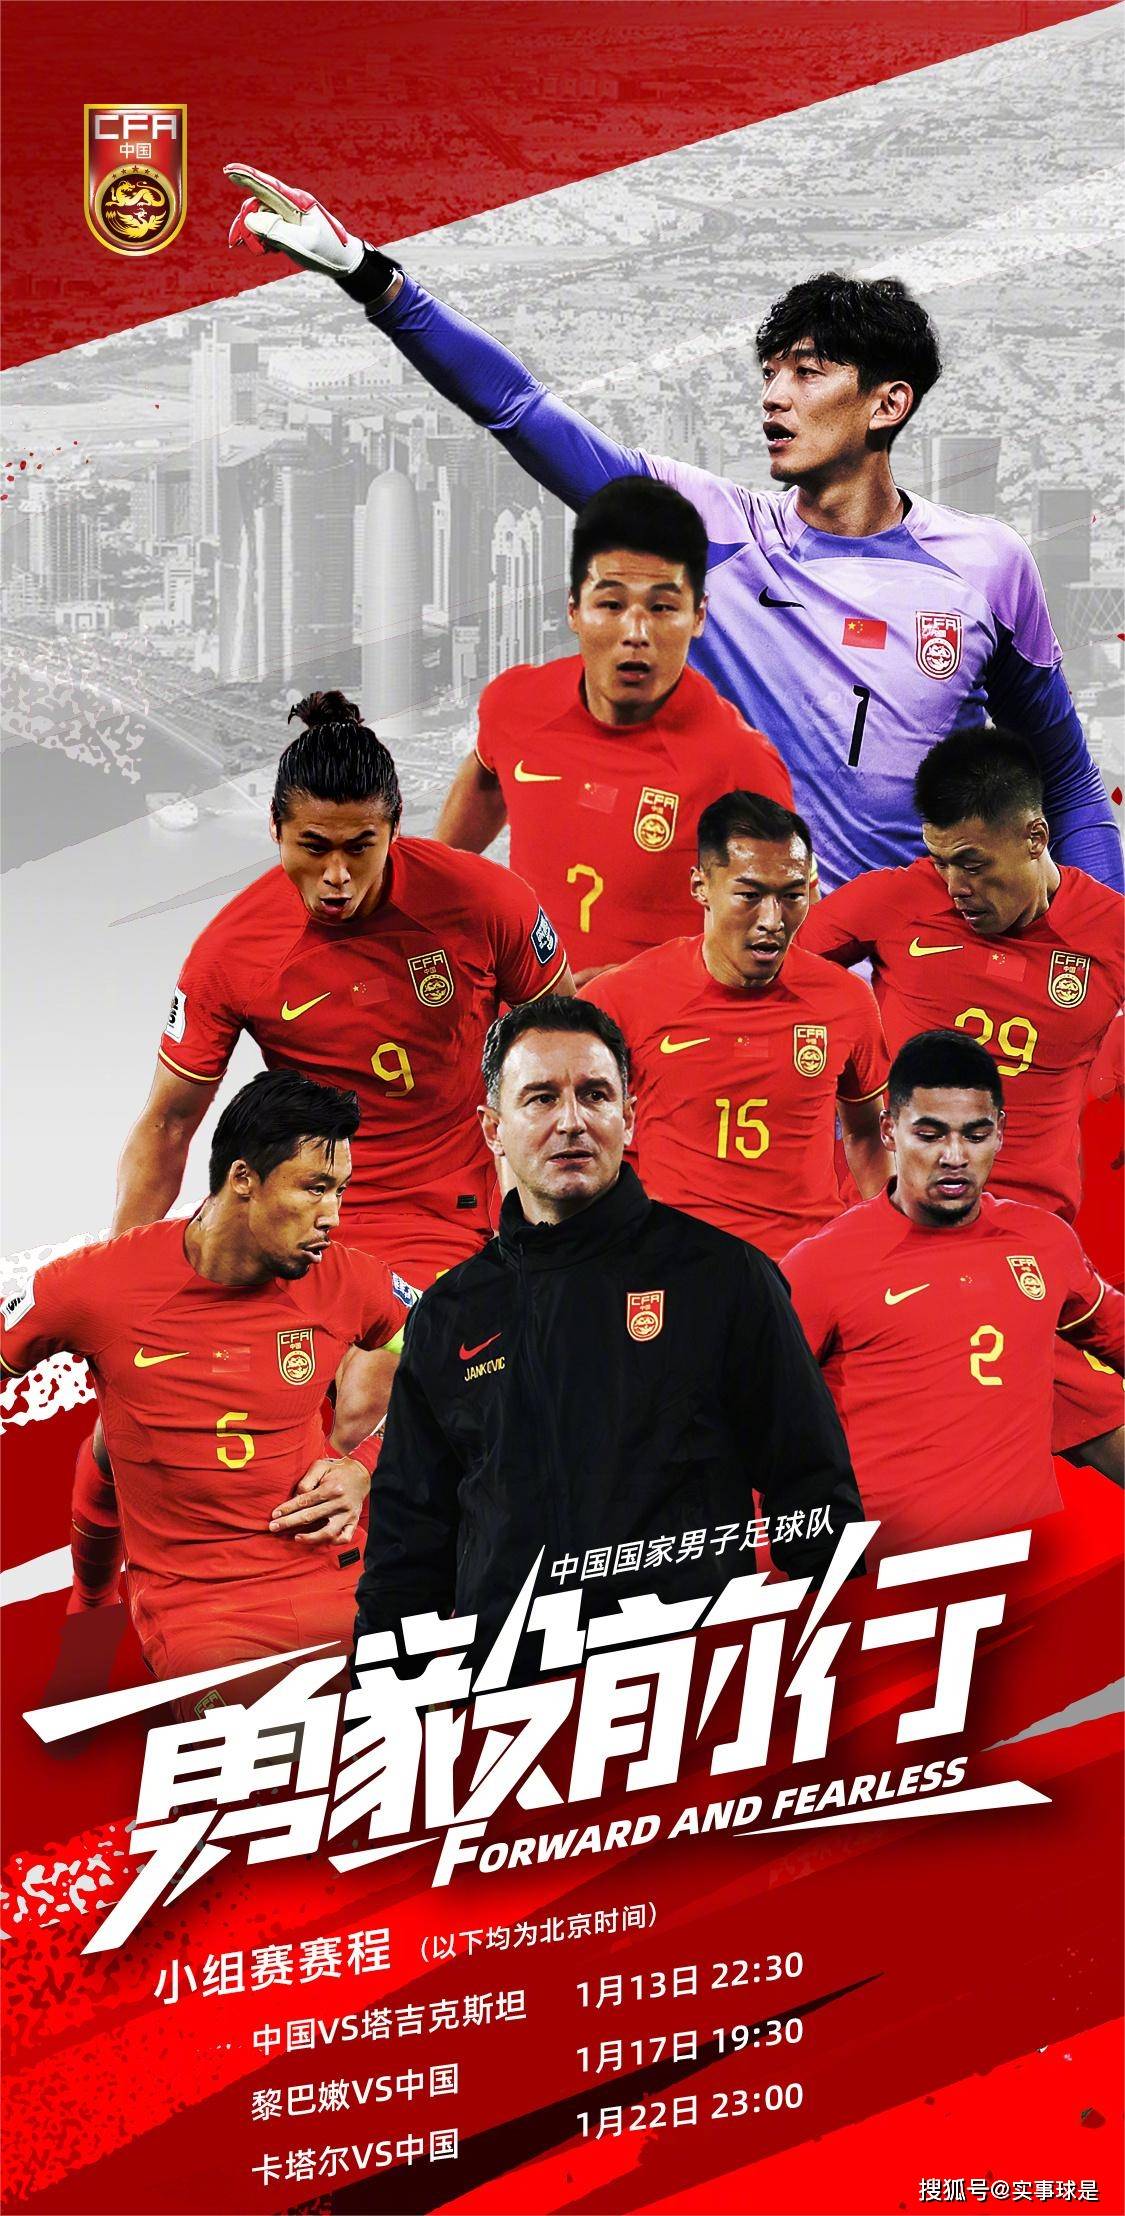 【168sports】最新！CCTV5今晚连播2场亚洲杯，提前15分钟聚焦国足对塔吉克斯坦